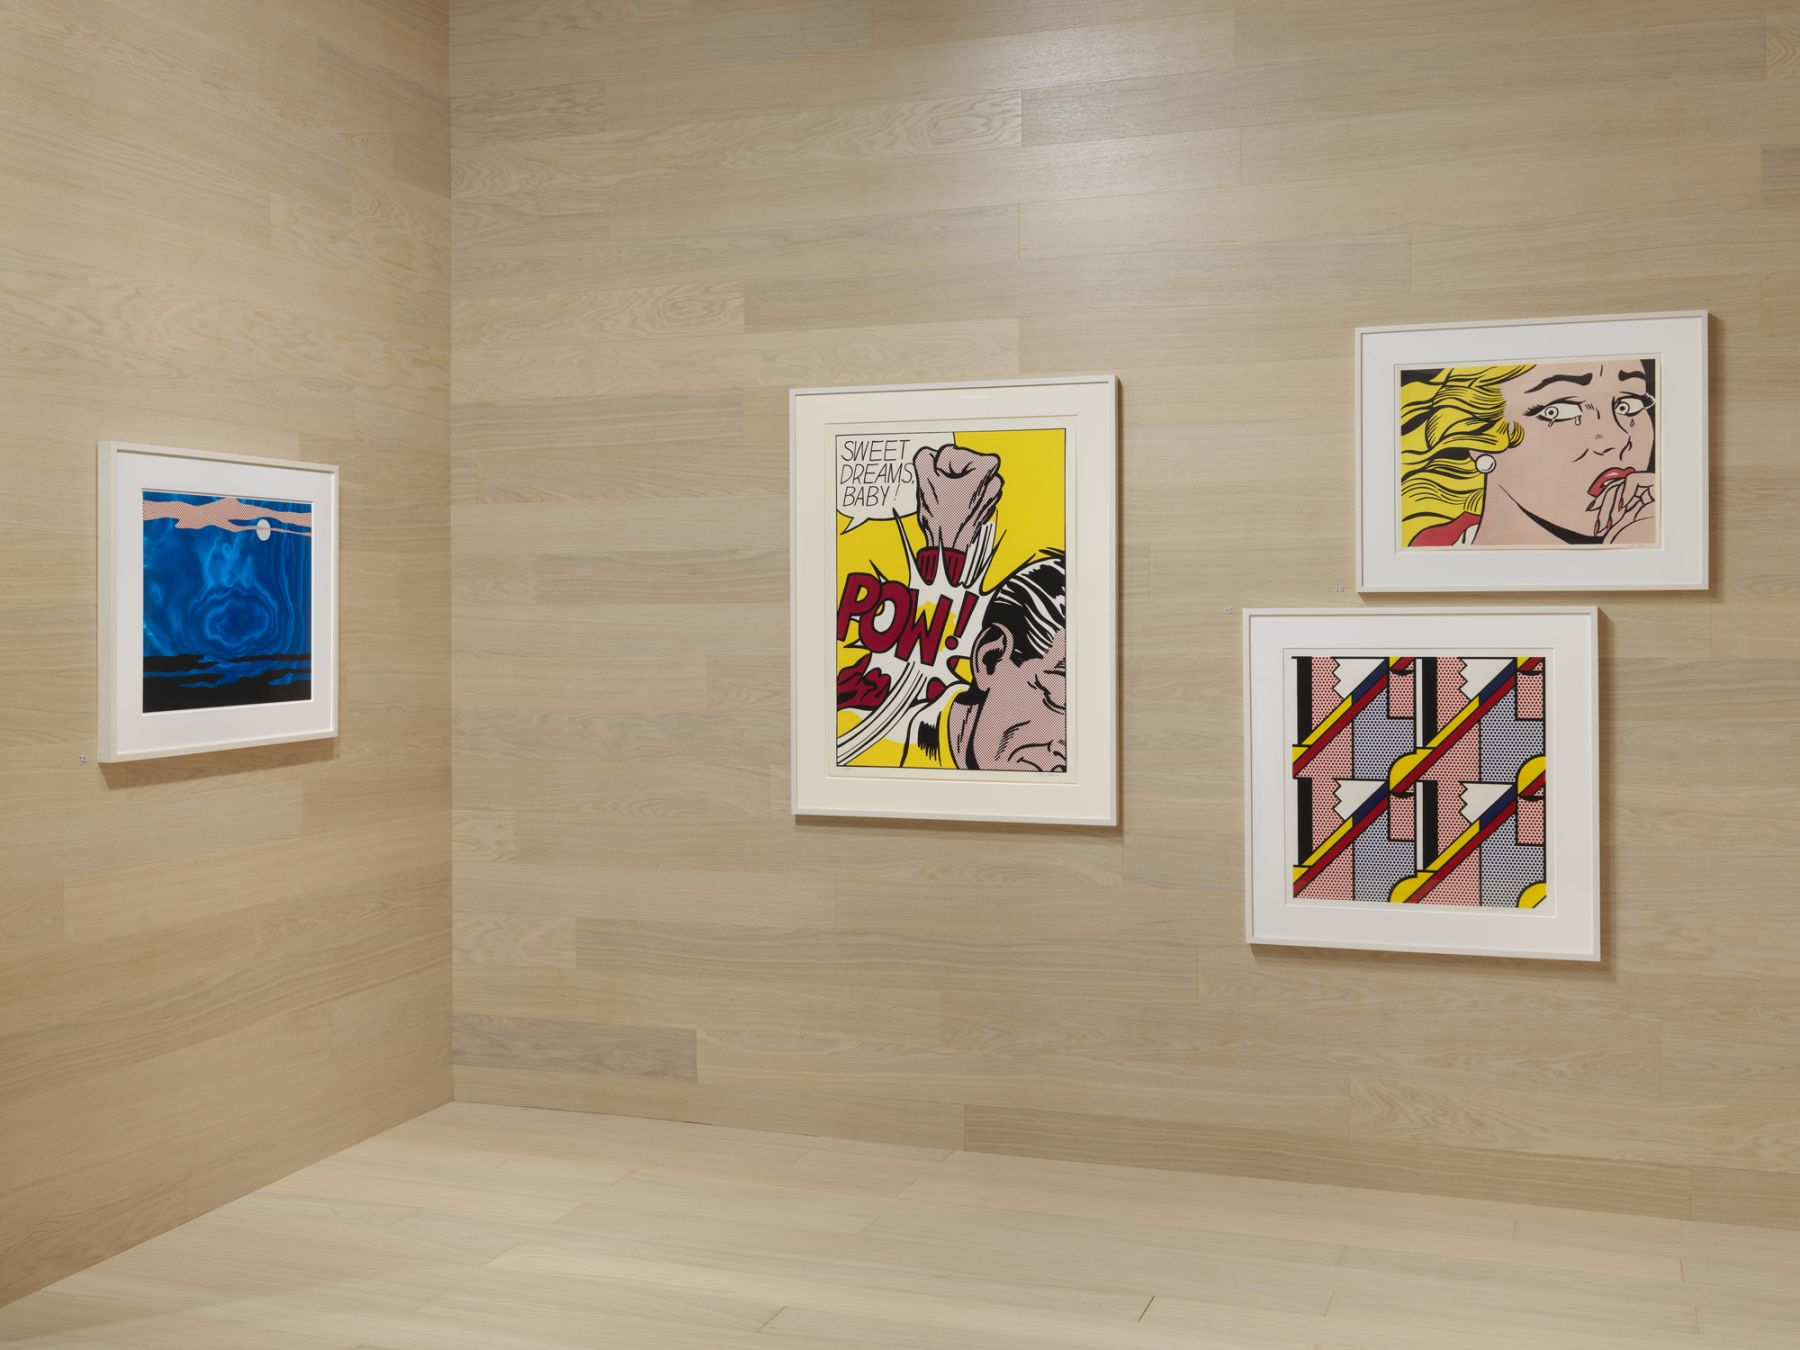 The Art Basel Miami Beach 2019 display at Susan Sheehan Gallery